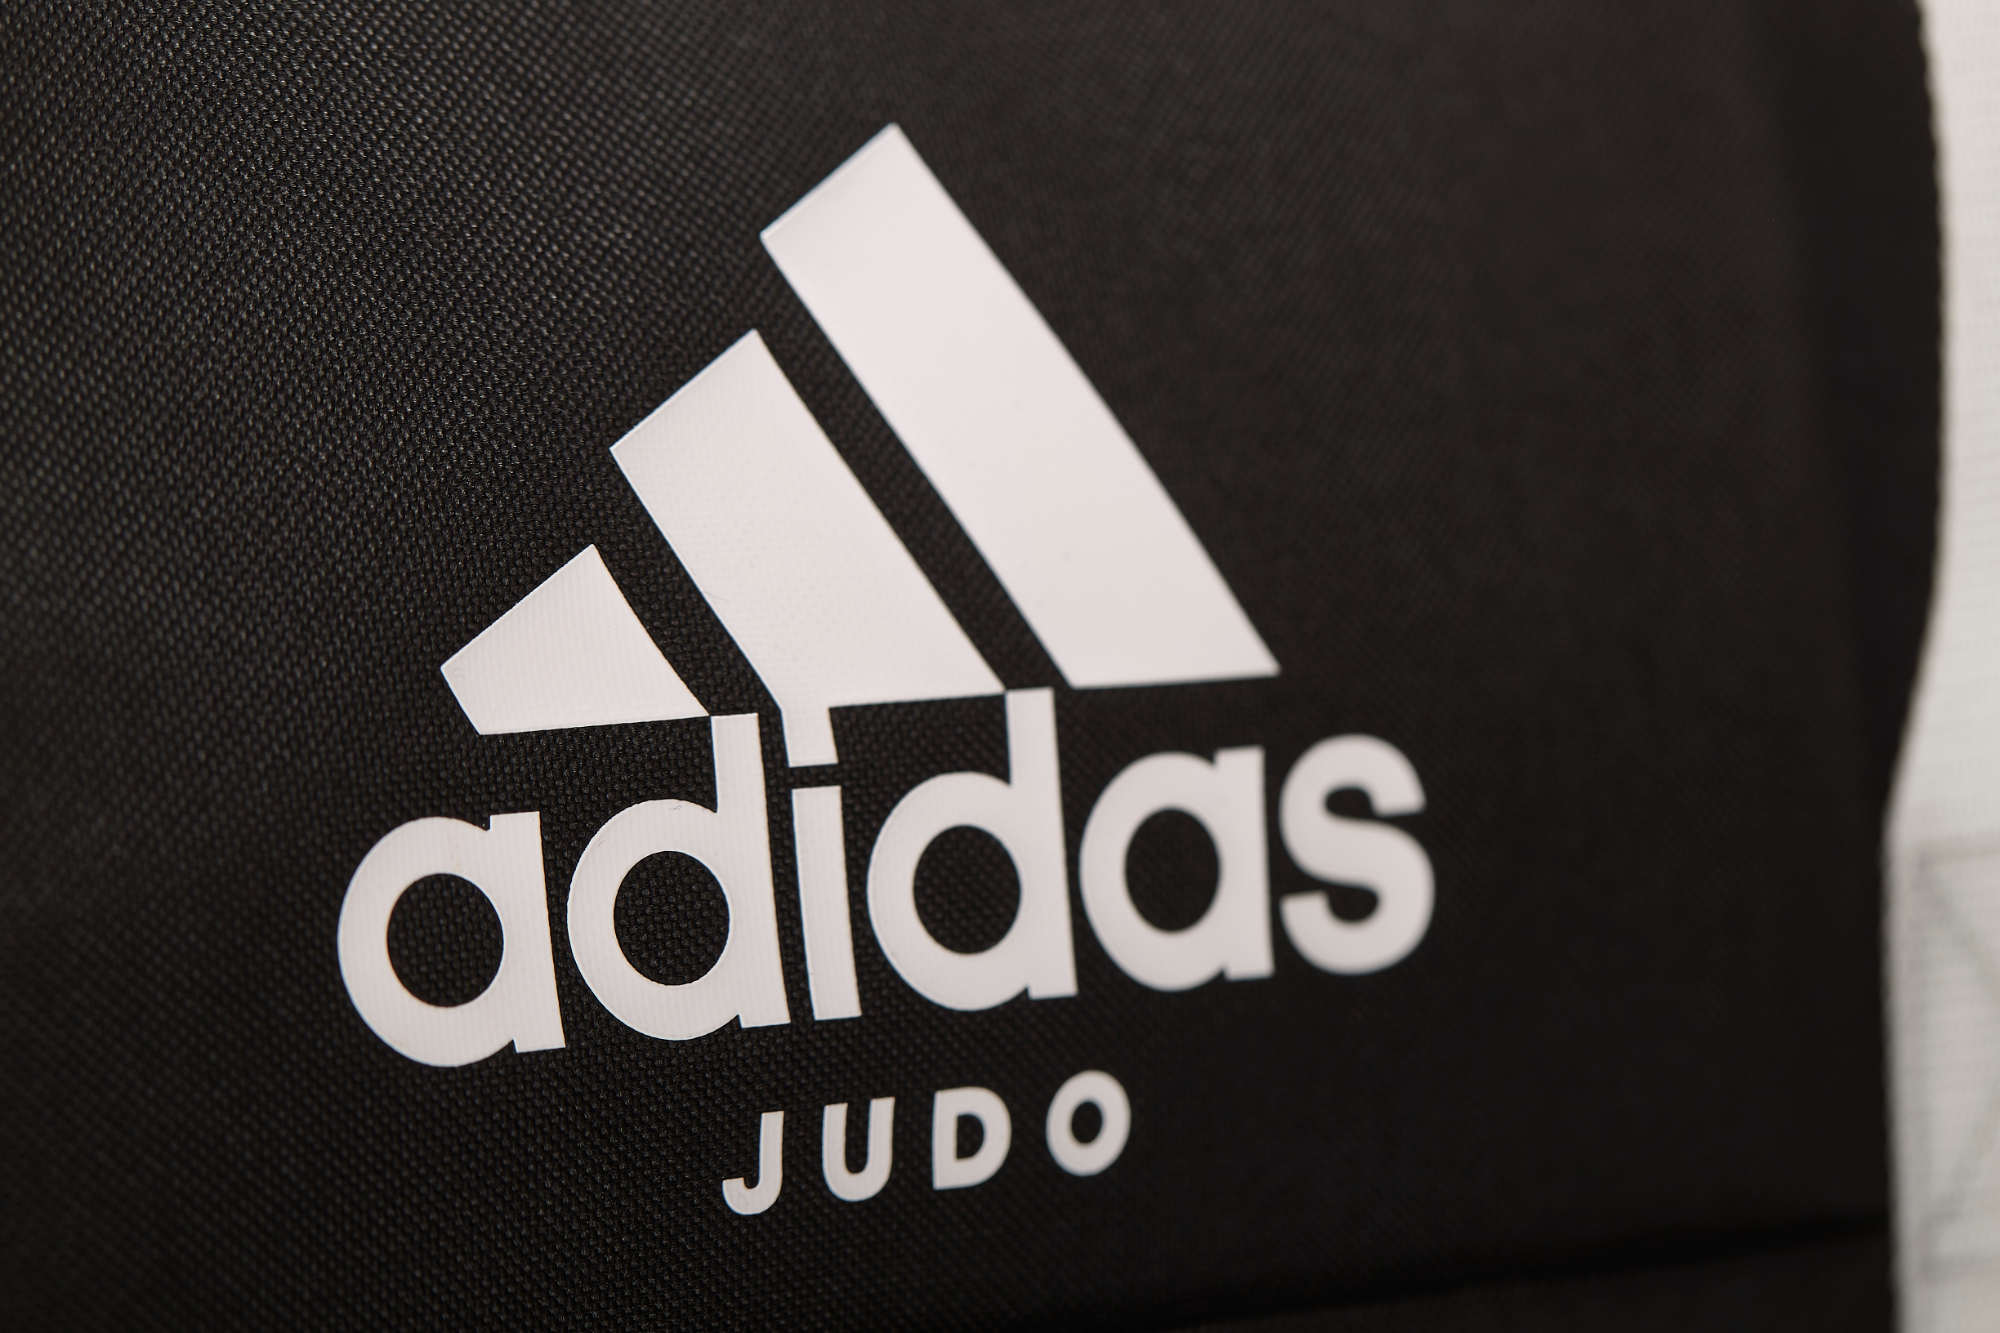 adidas 2in1 Bag Judo black/white M, ADIACC200J